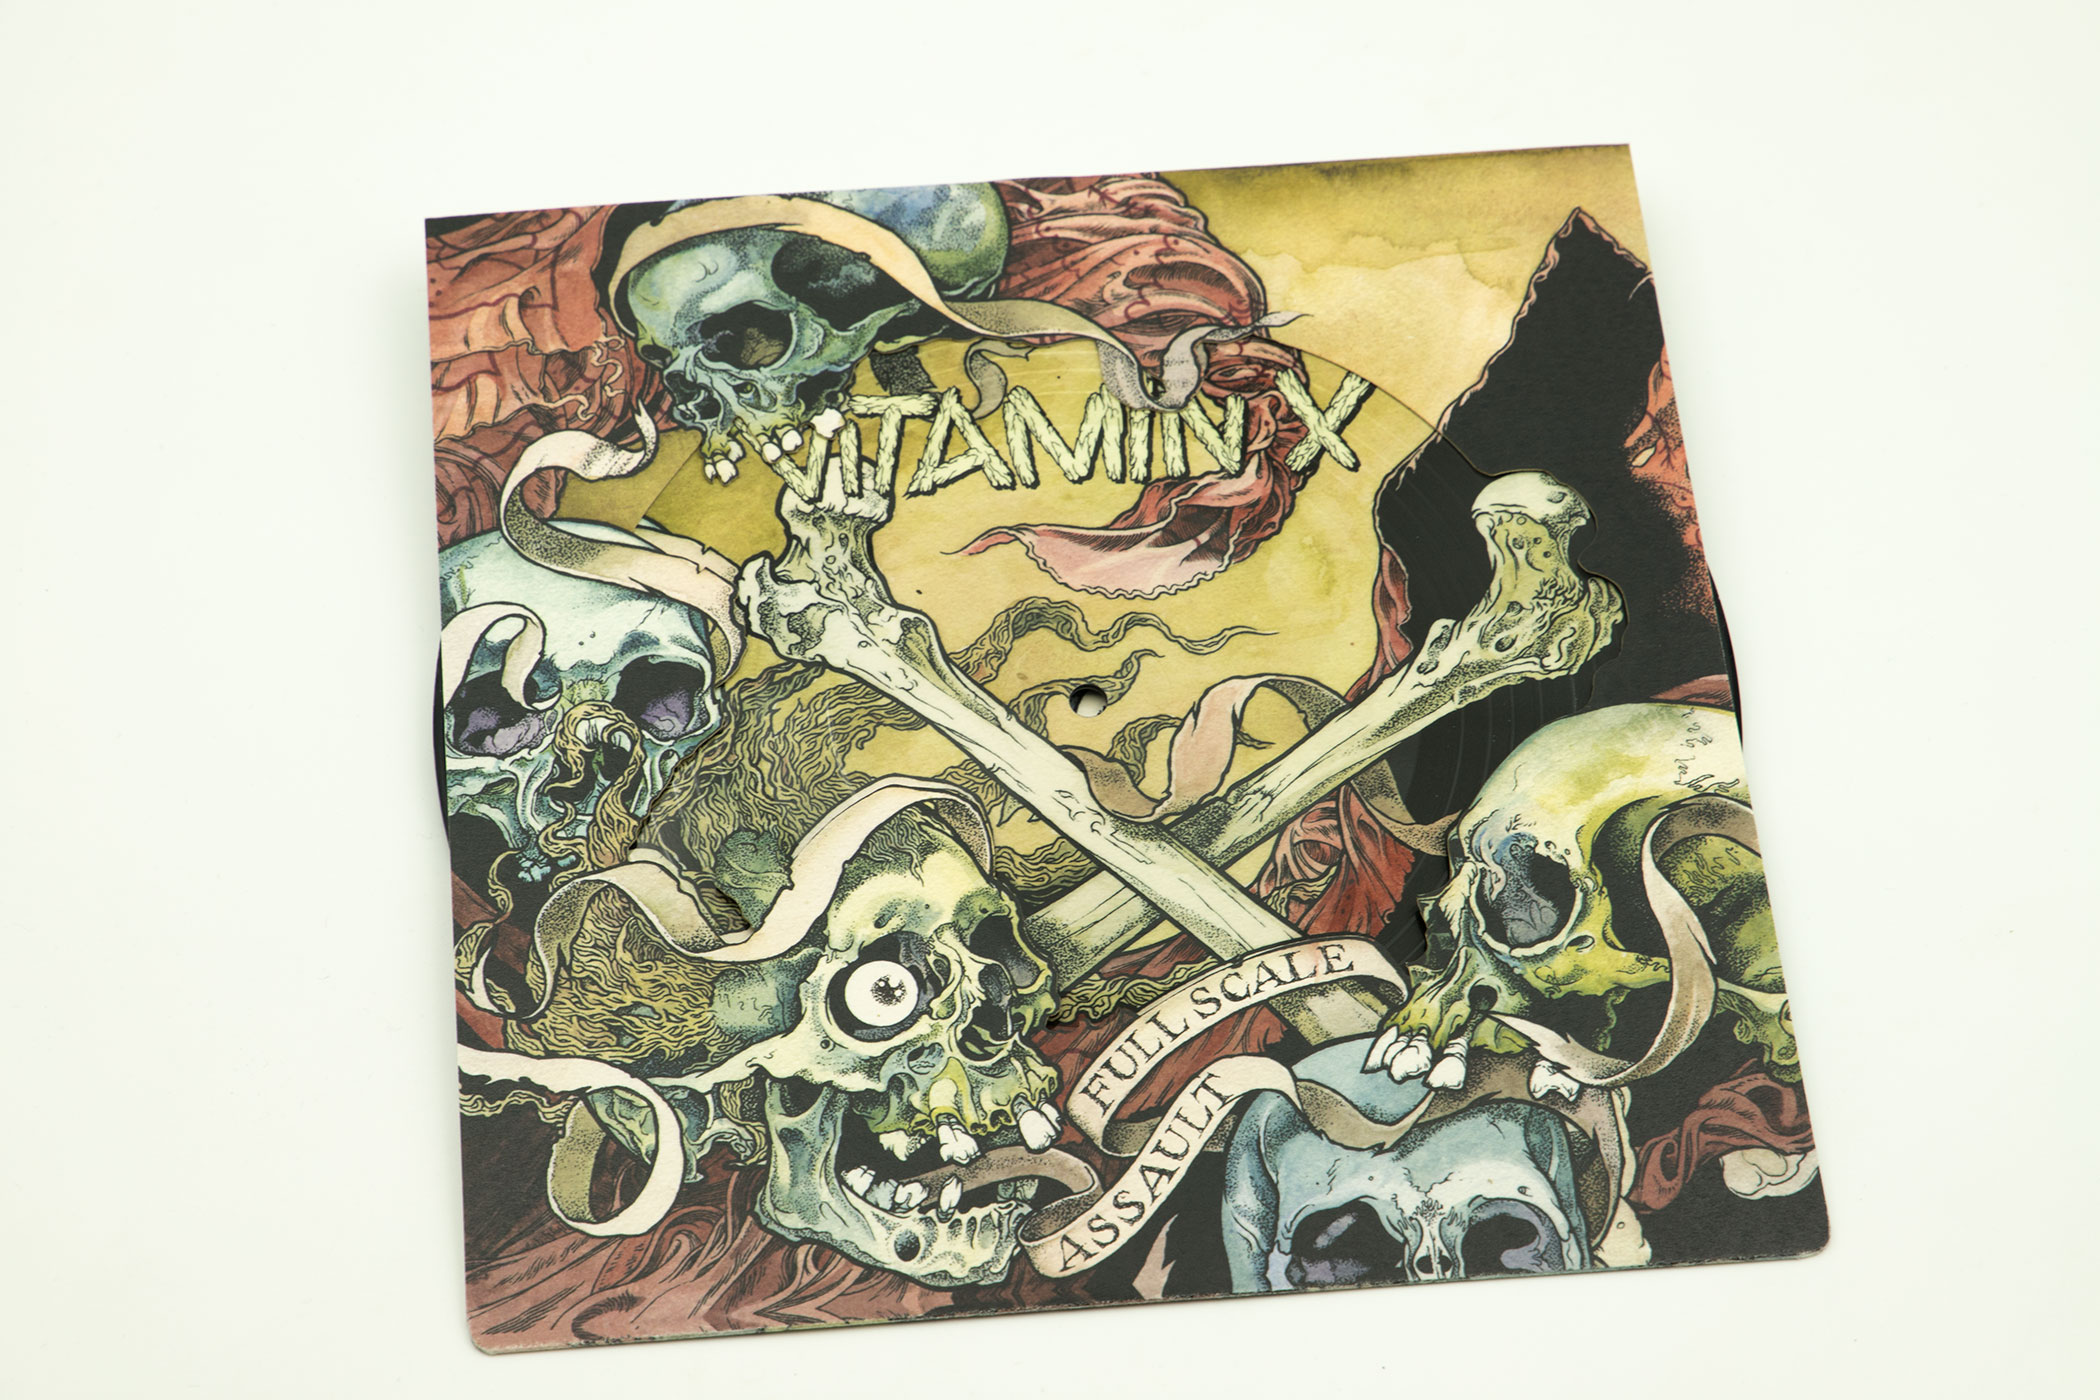 VITAMIN X "Full Scale Assault" Picture Disc 10" Vinyl